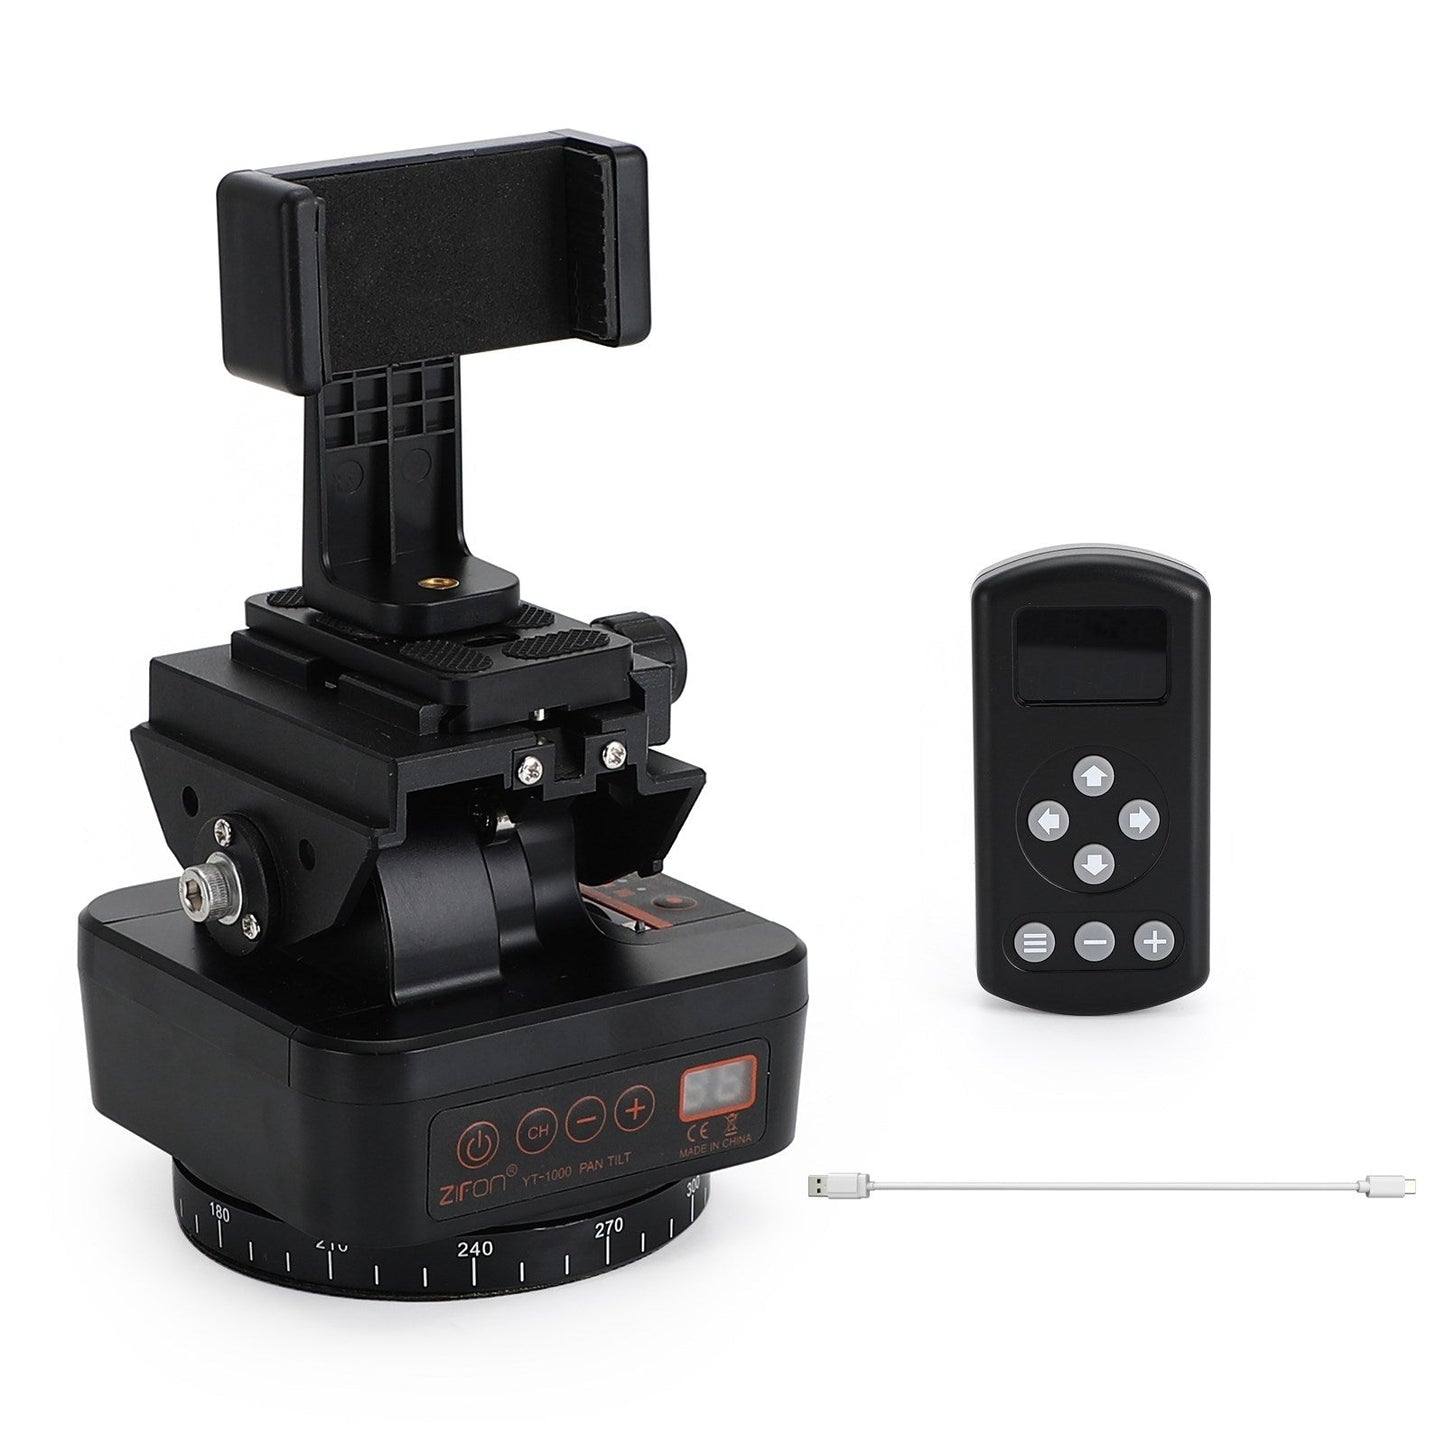 ZIFON YT-1000 Remote 360° Panoramic Rotating Tripod Head For Gopro DSLR Phone